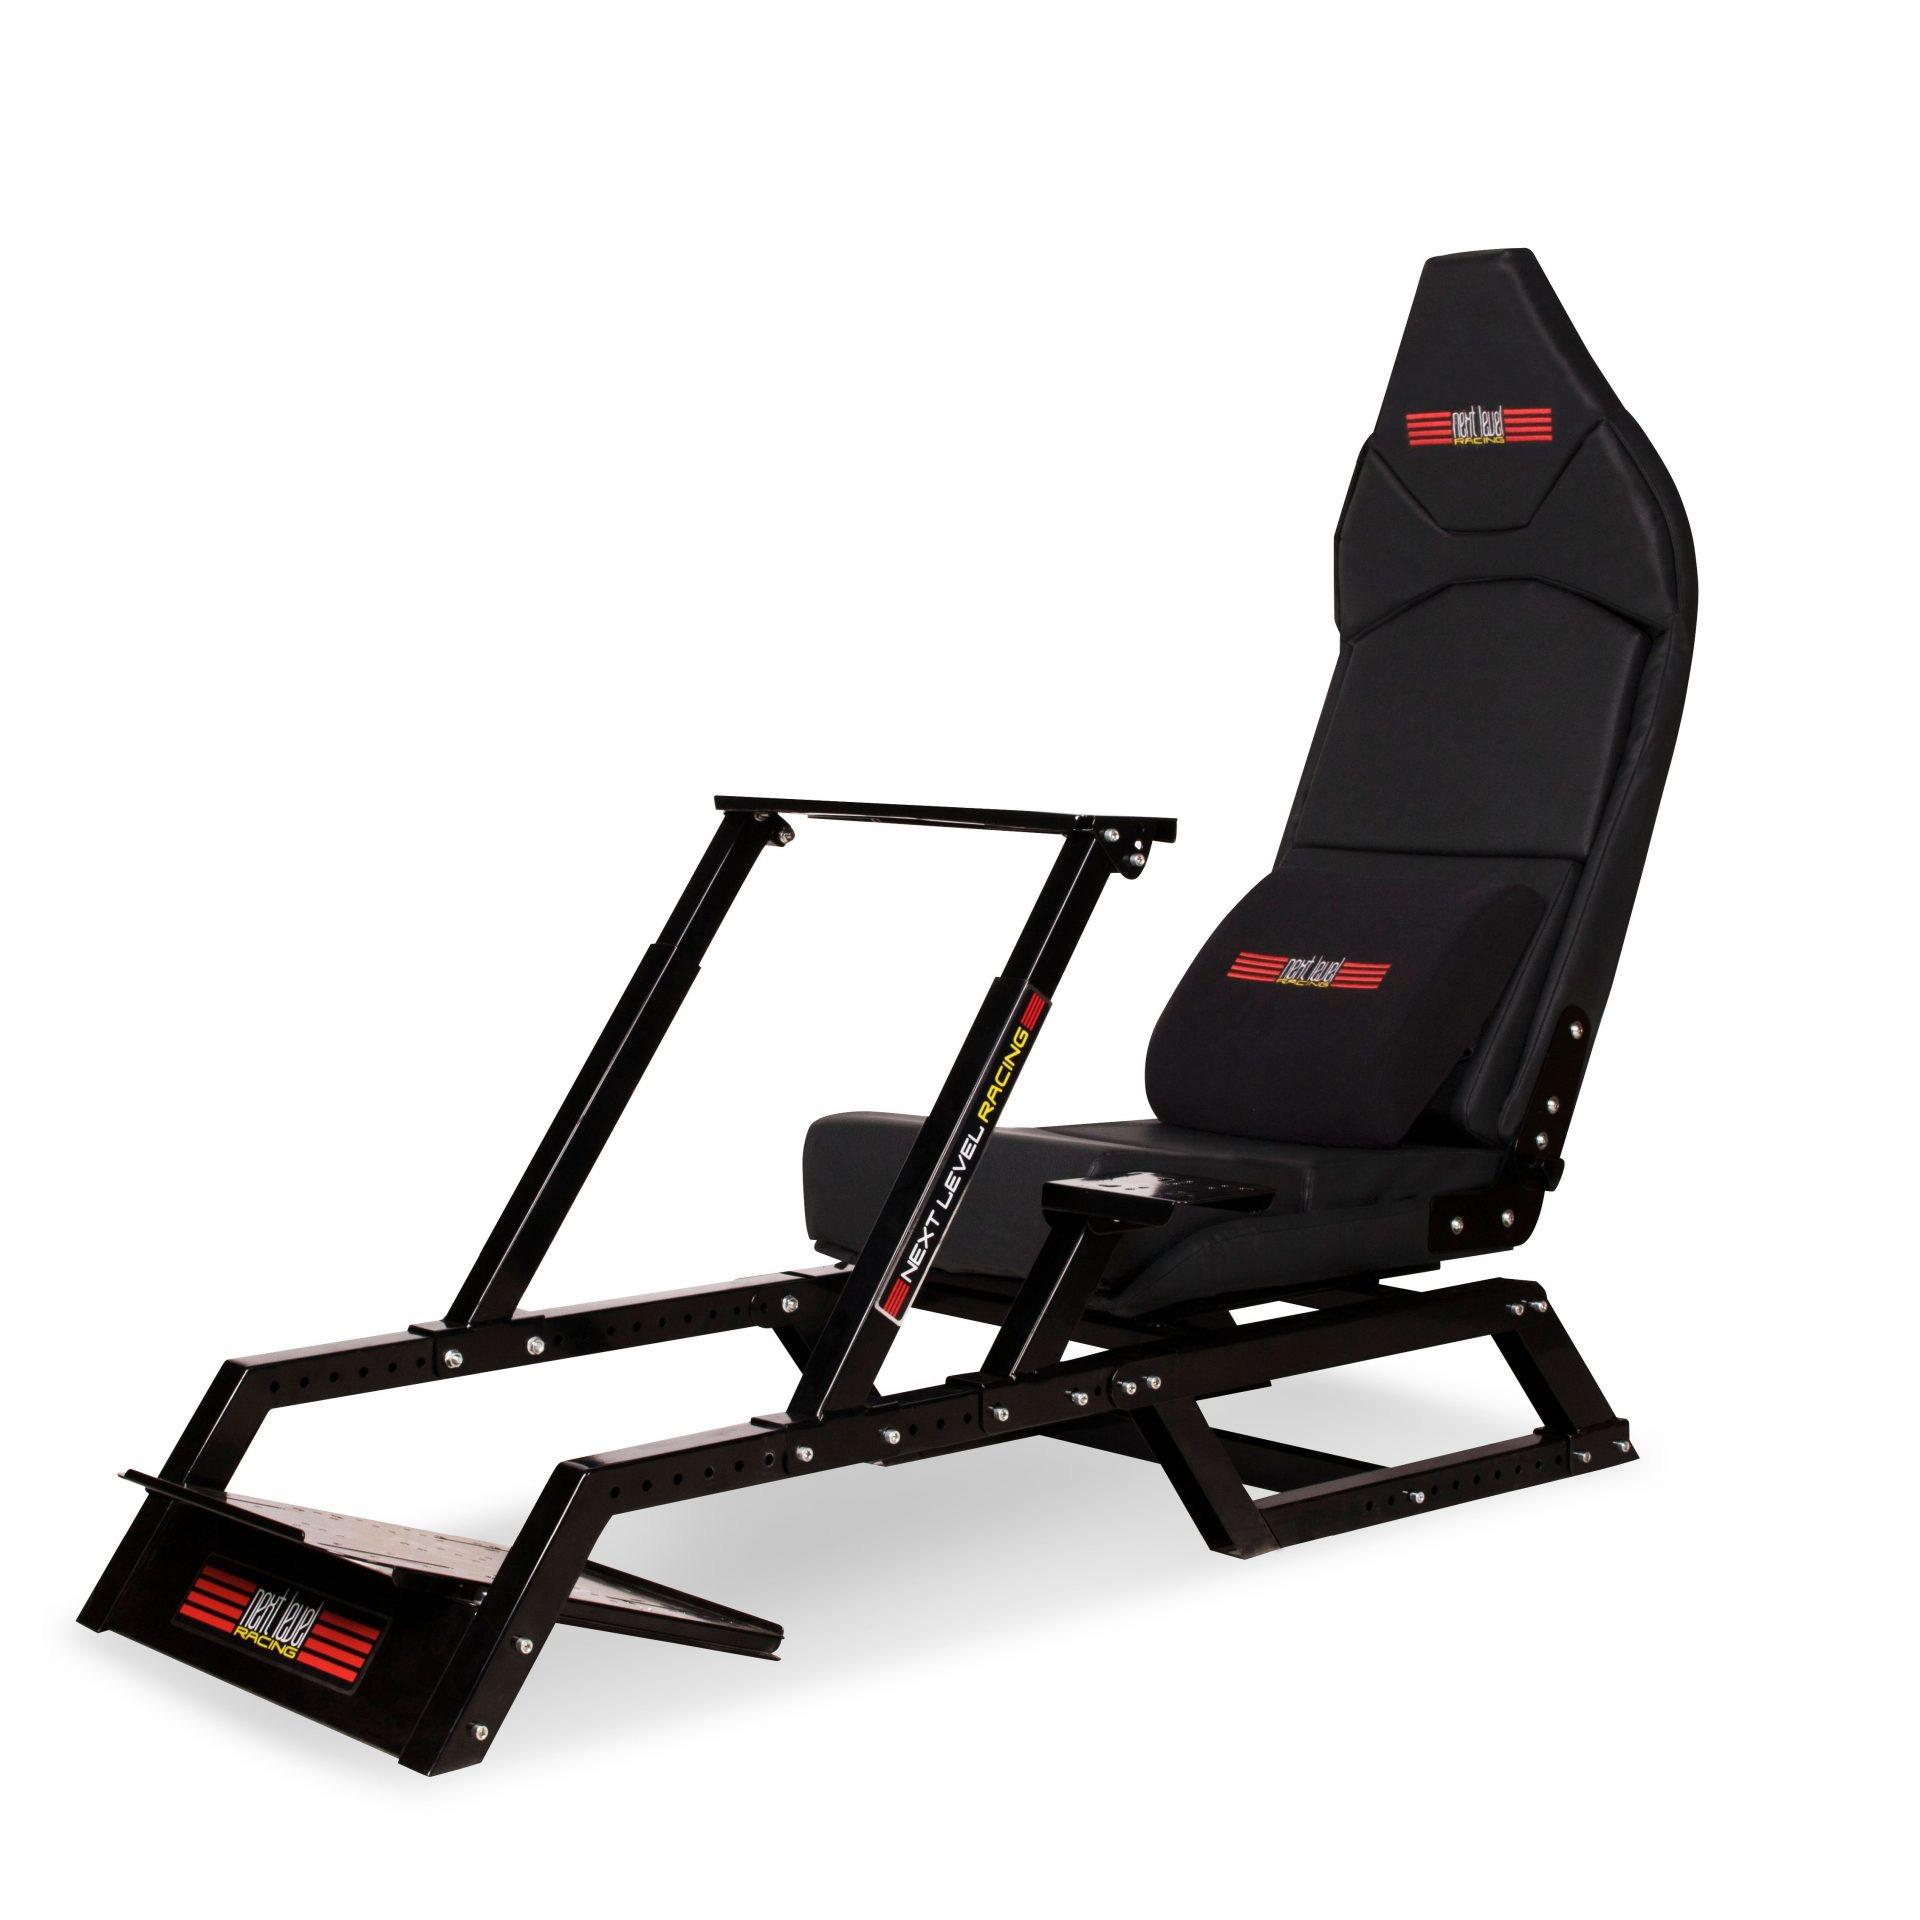 Next Level Racing F1GT Formula 1 And GT Simulator Cockpit